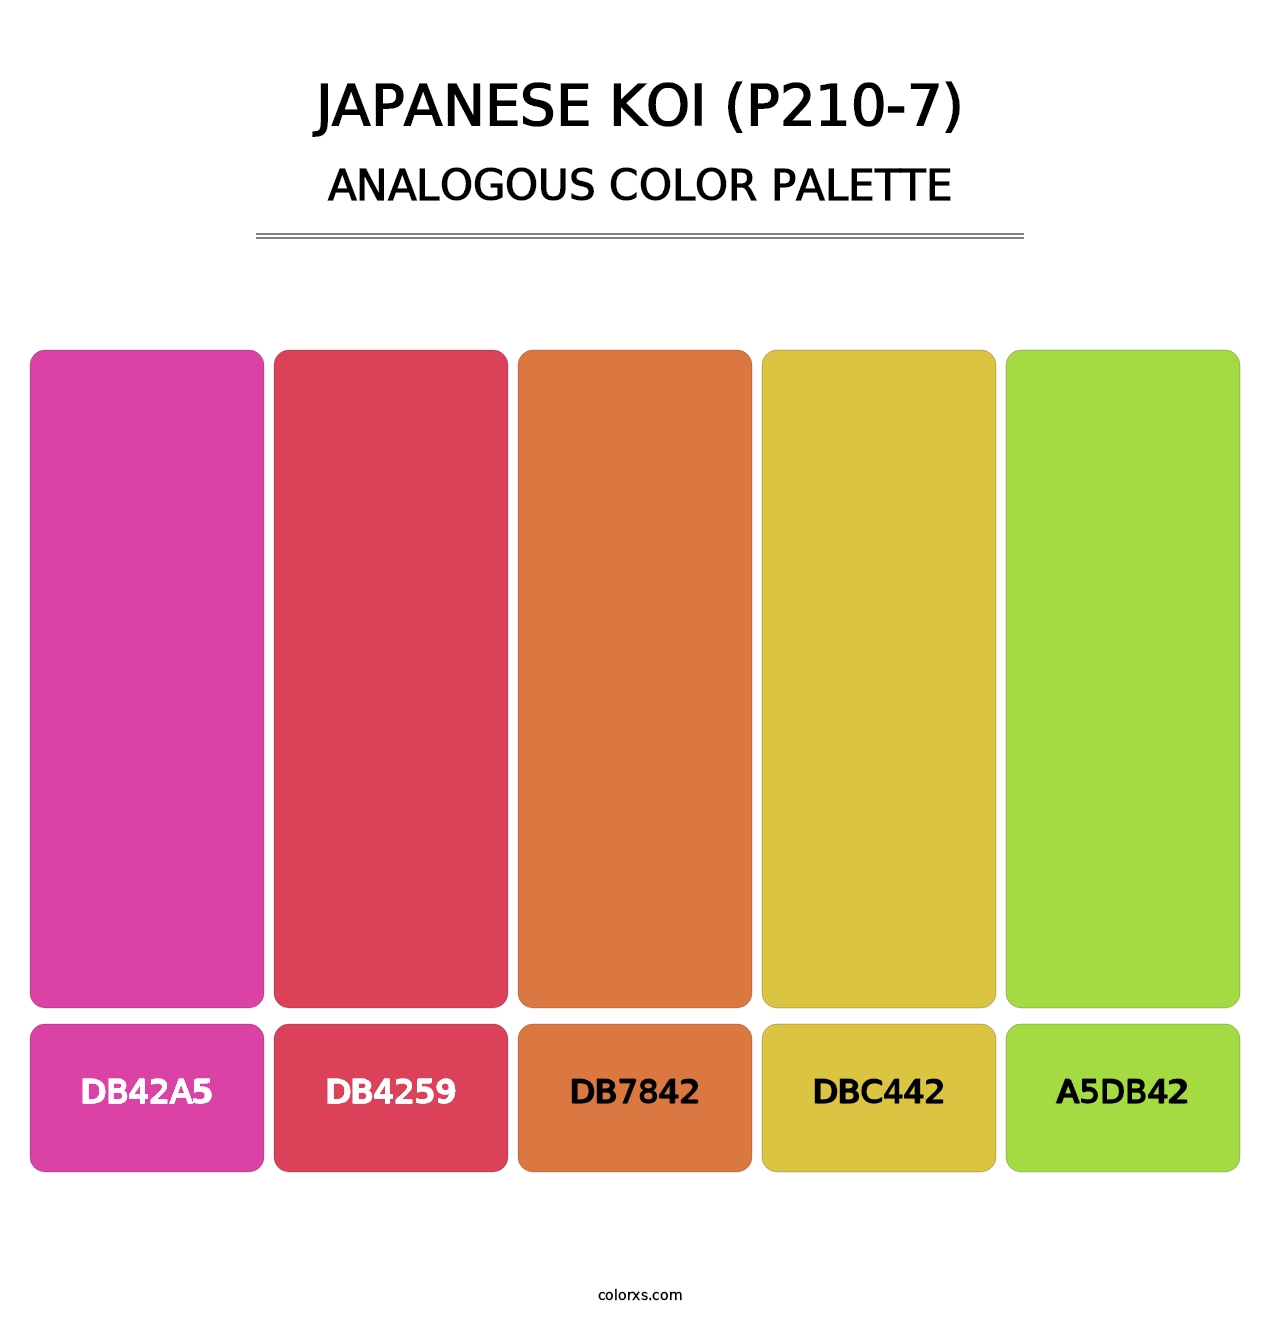 Japanese Koi (P210-7) - Analogous Color Palette